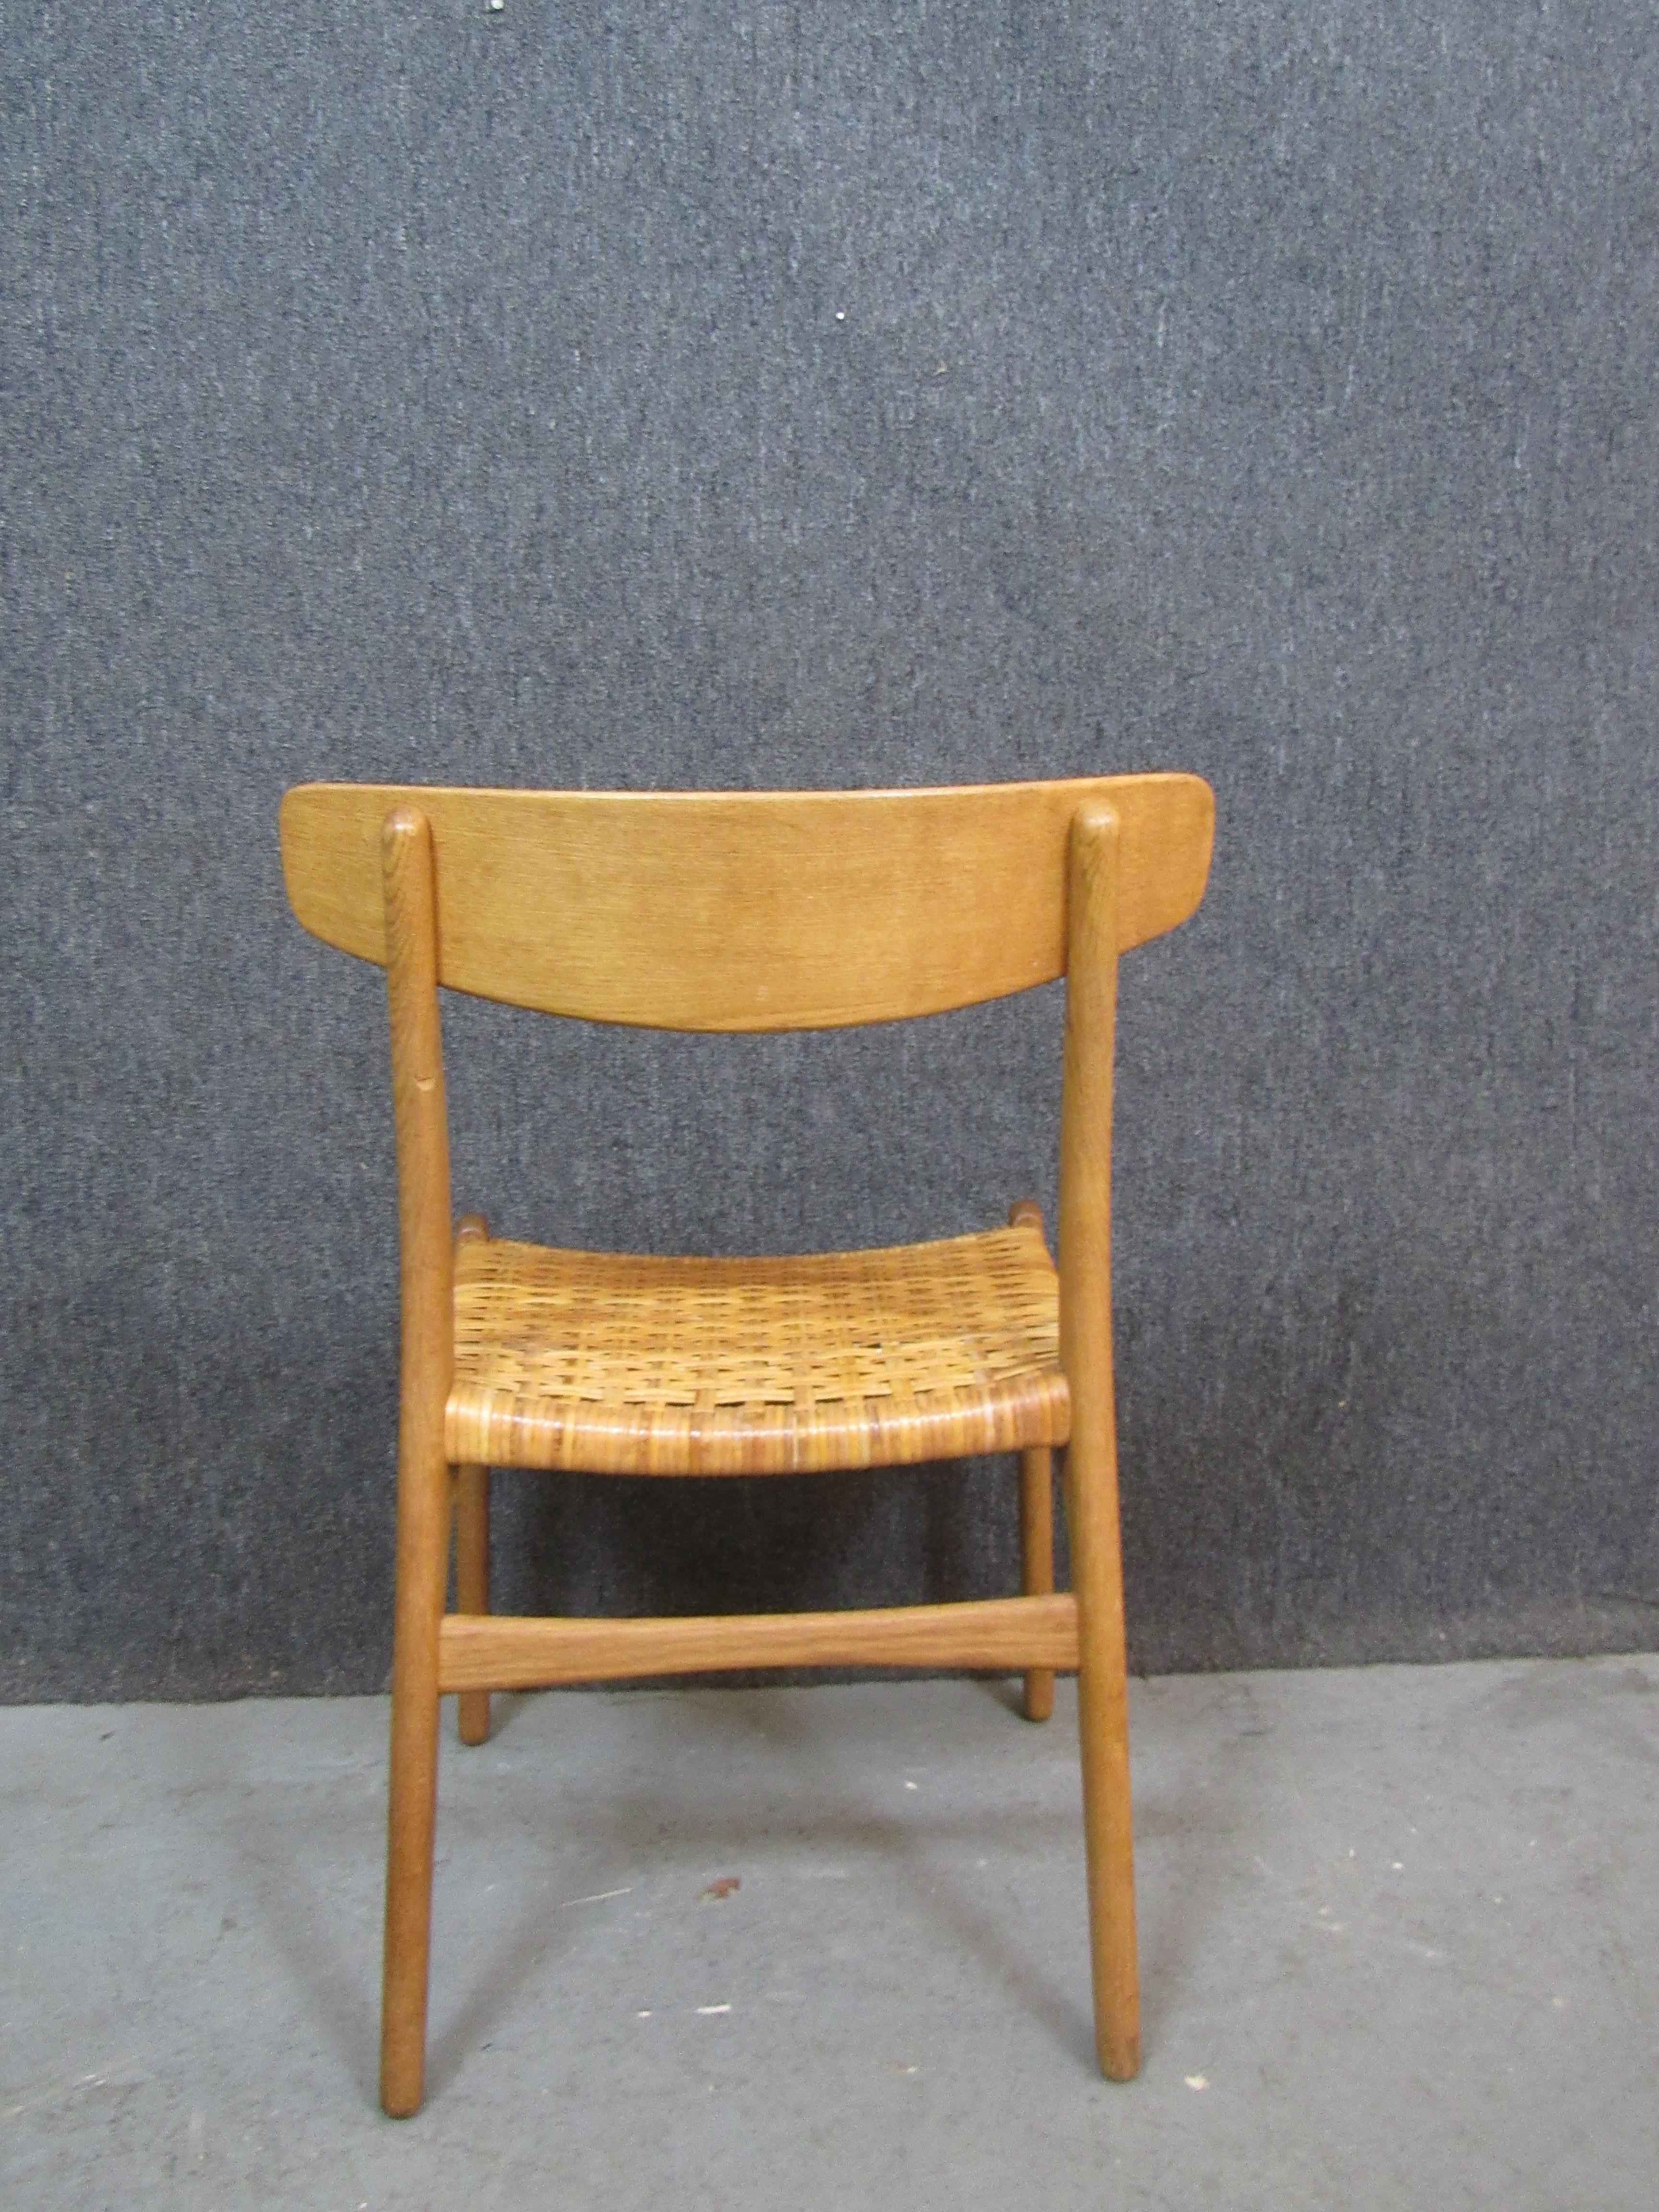 Wicker Set of 8 Original Hans Wegner Oak CH23 Chairs by Carl Hansen & Son For Sale